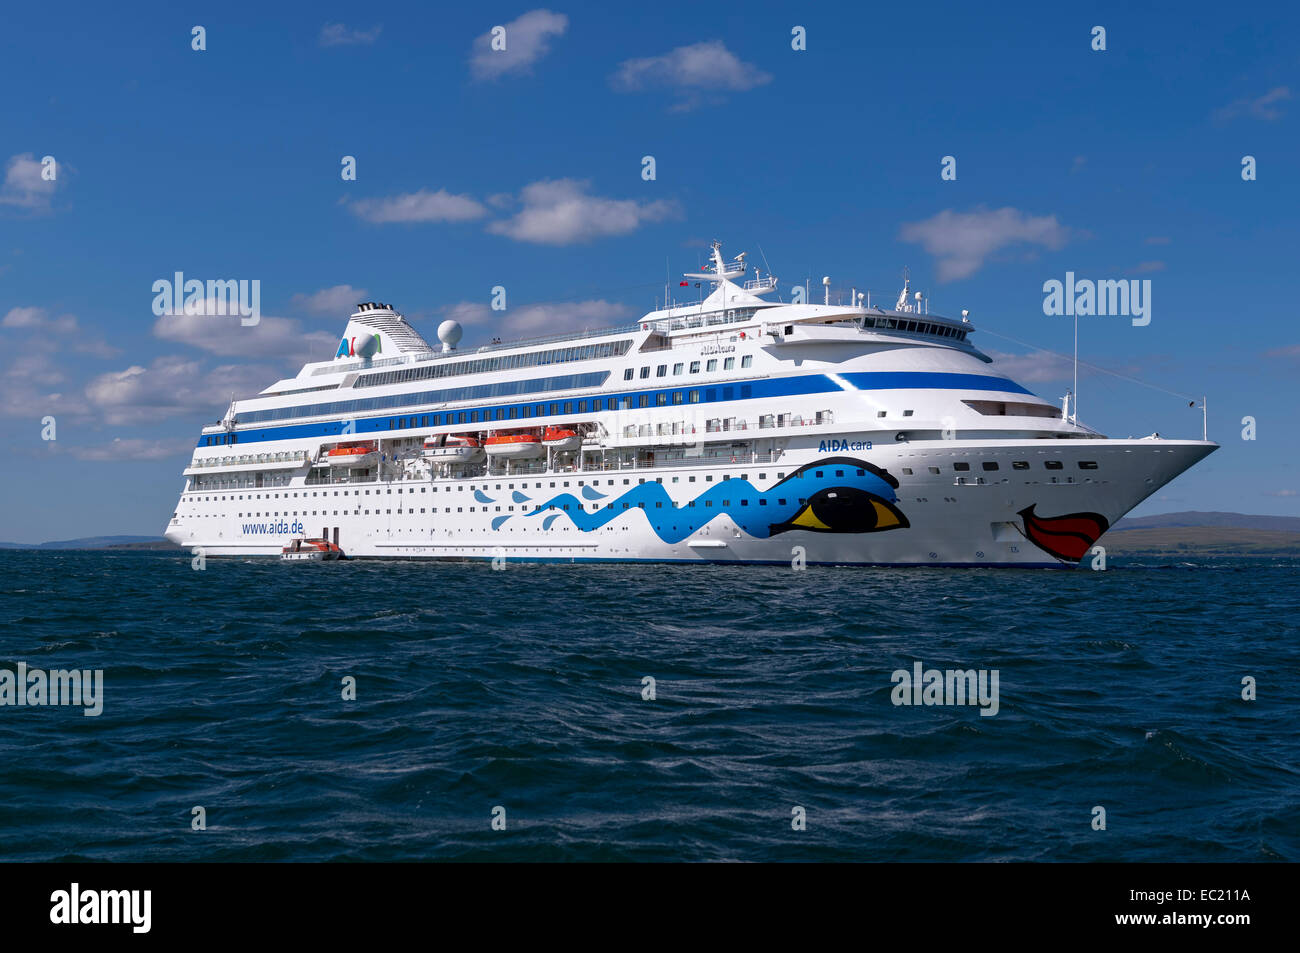 The cruise ship AIDAcara at anchor off Oban, Scotland, United Kingdom Stock Photo